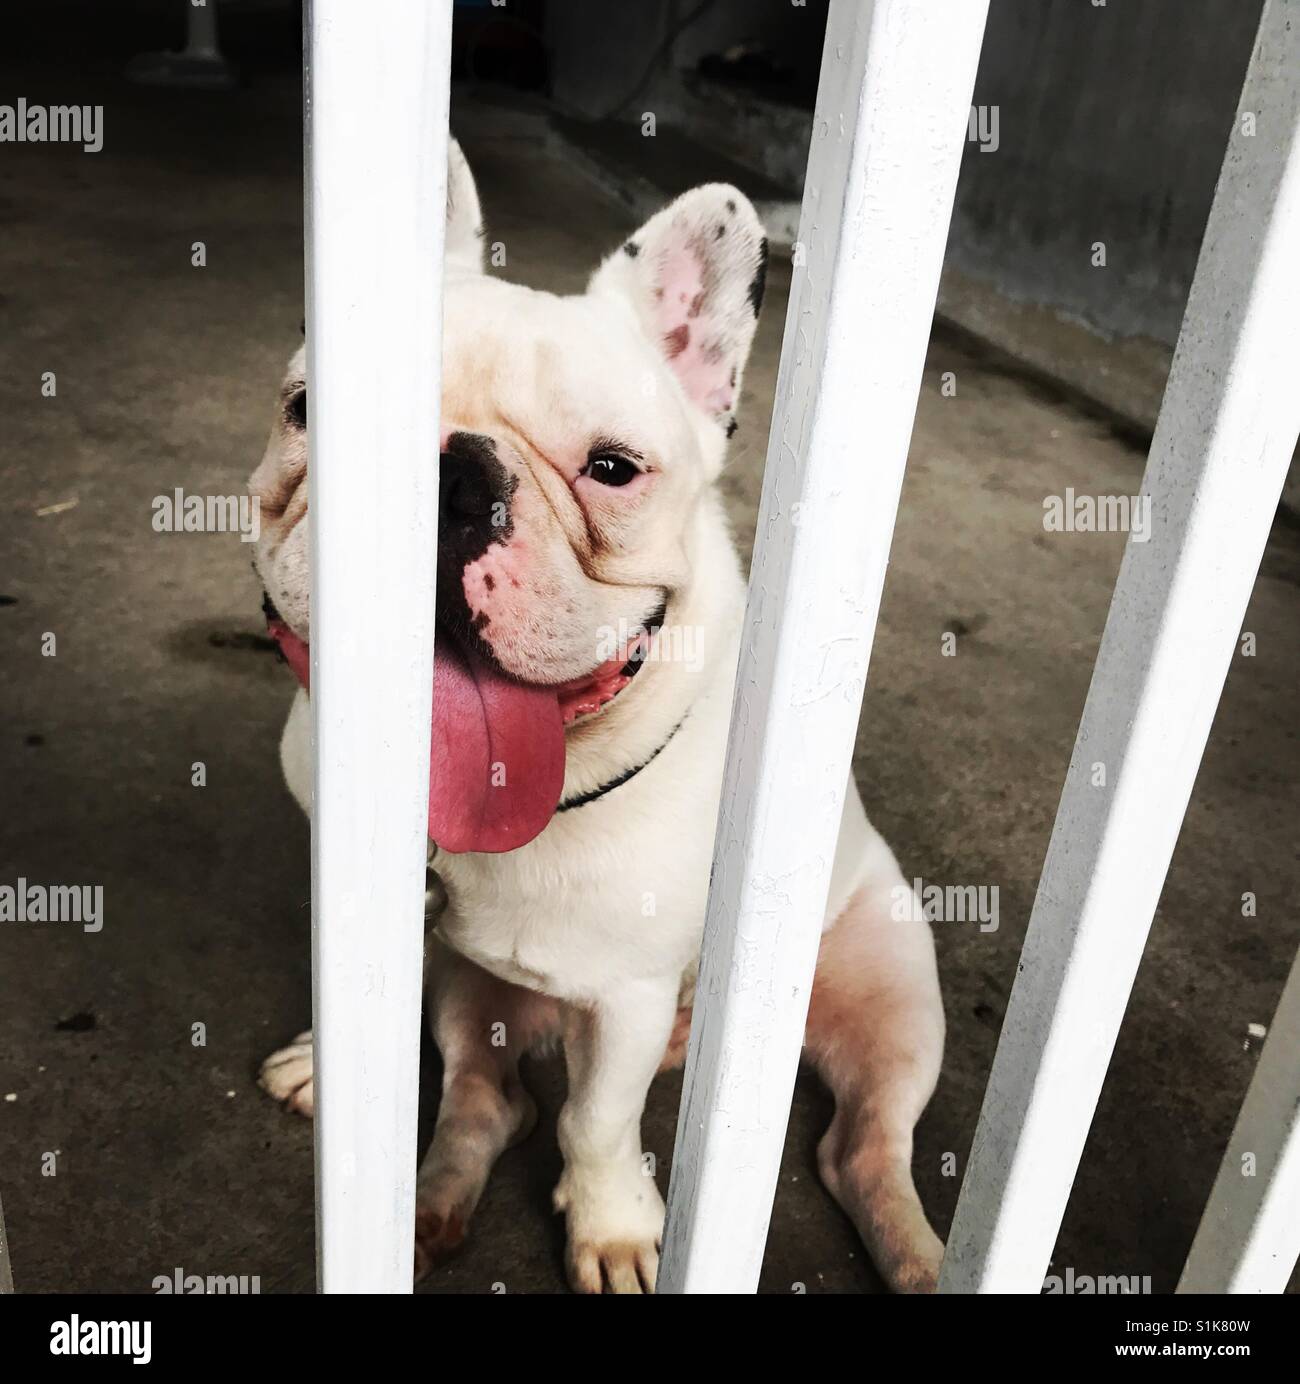 Frenchie behind bars Stock Photo